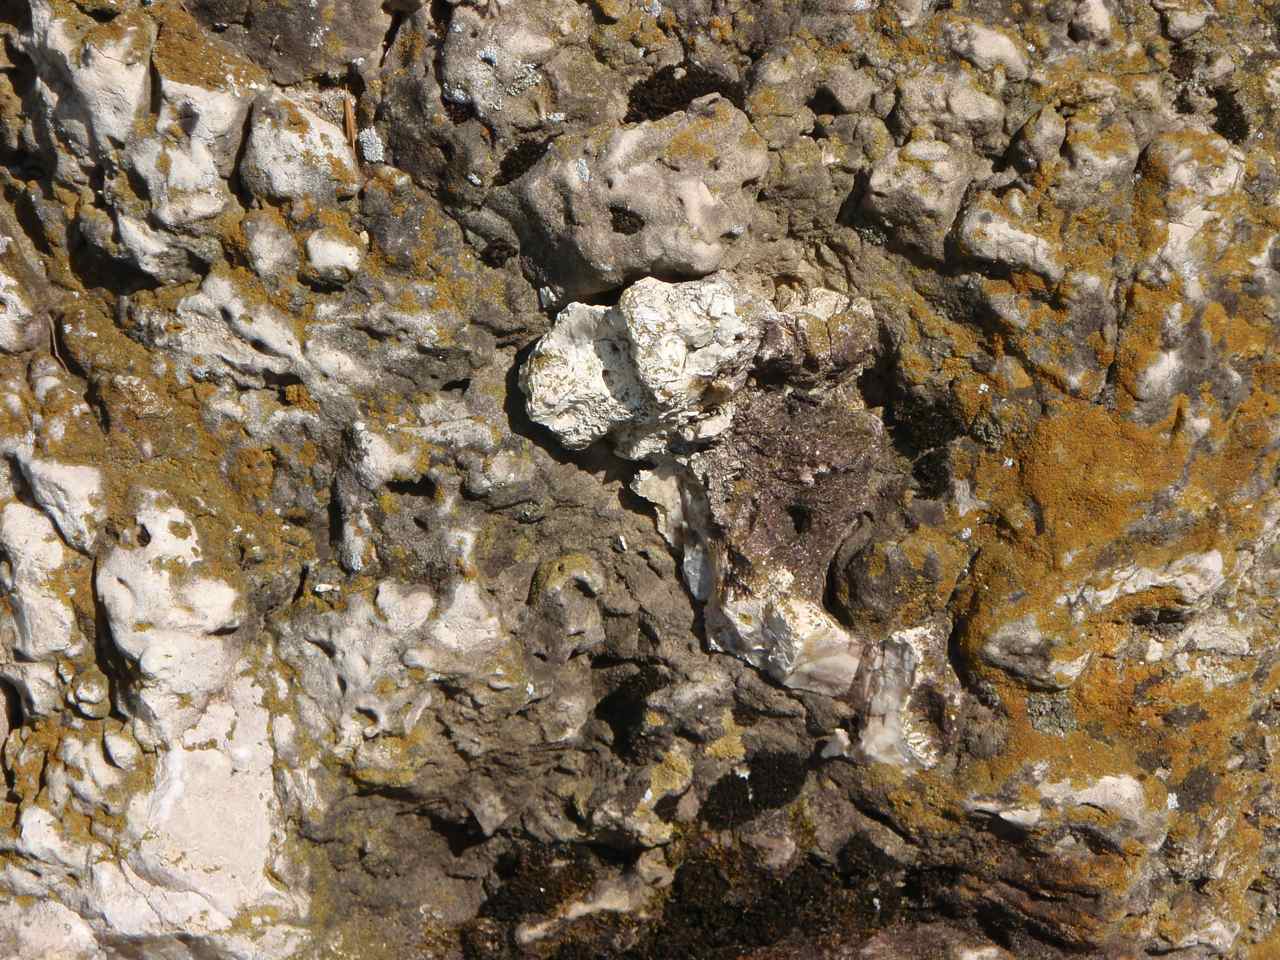 photograph of rocks